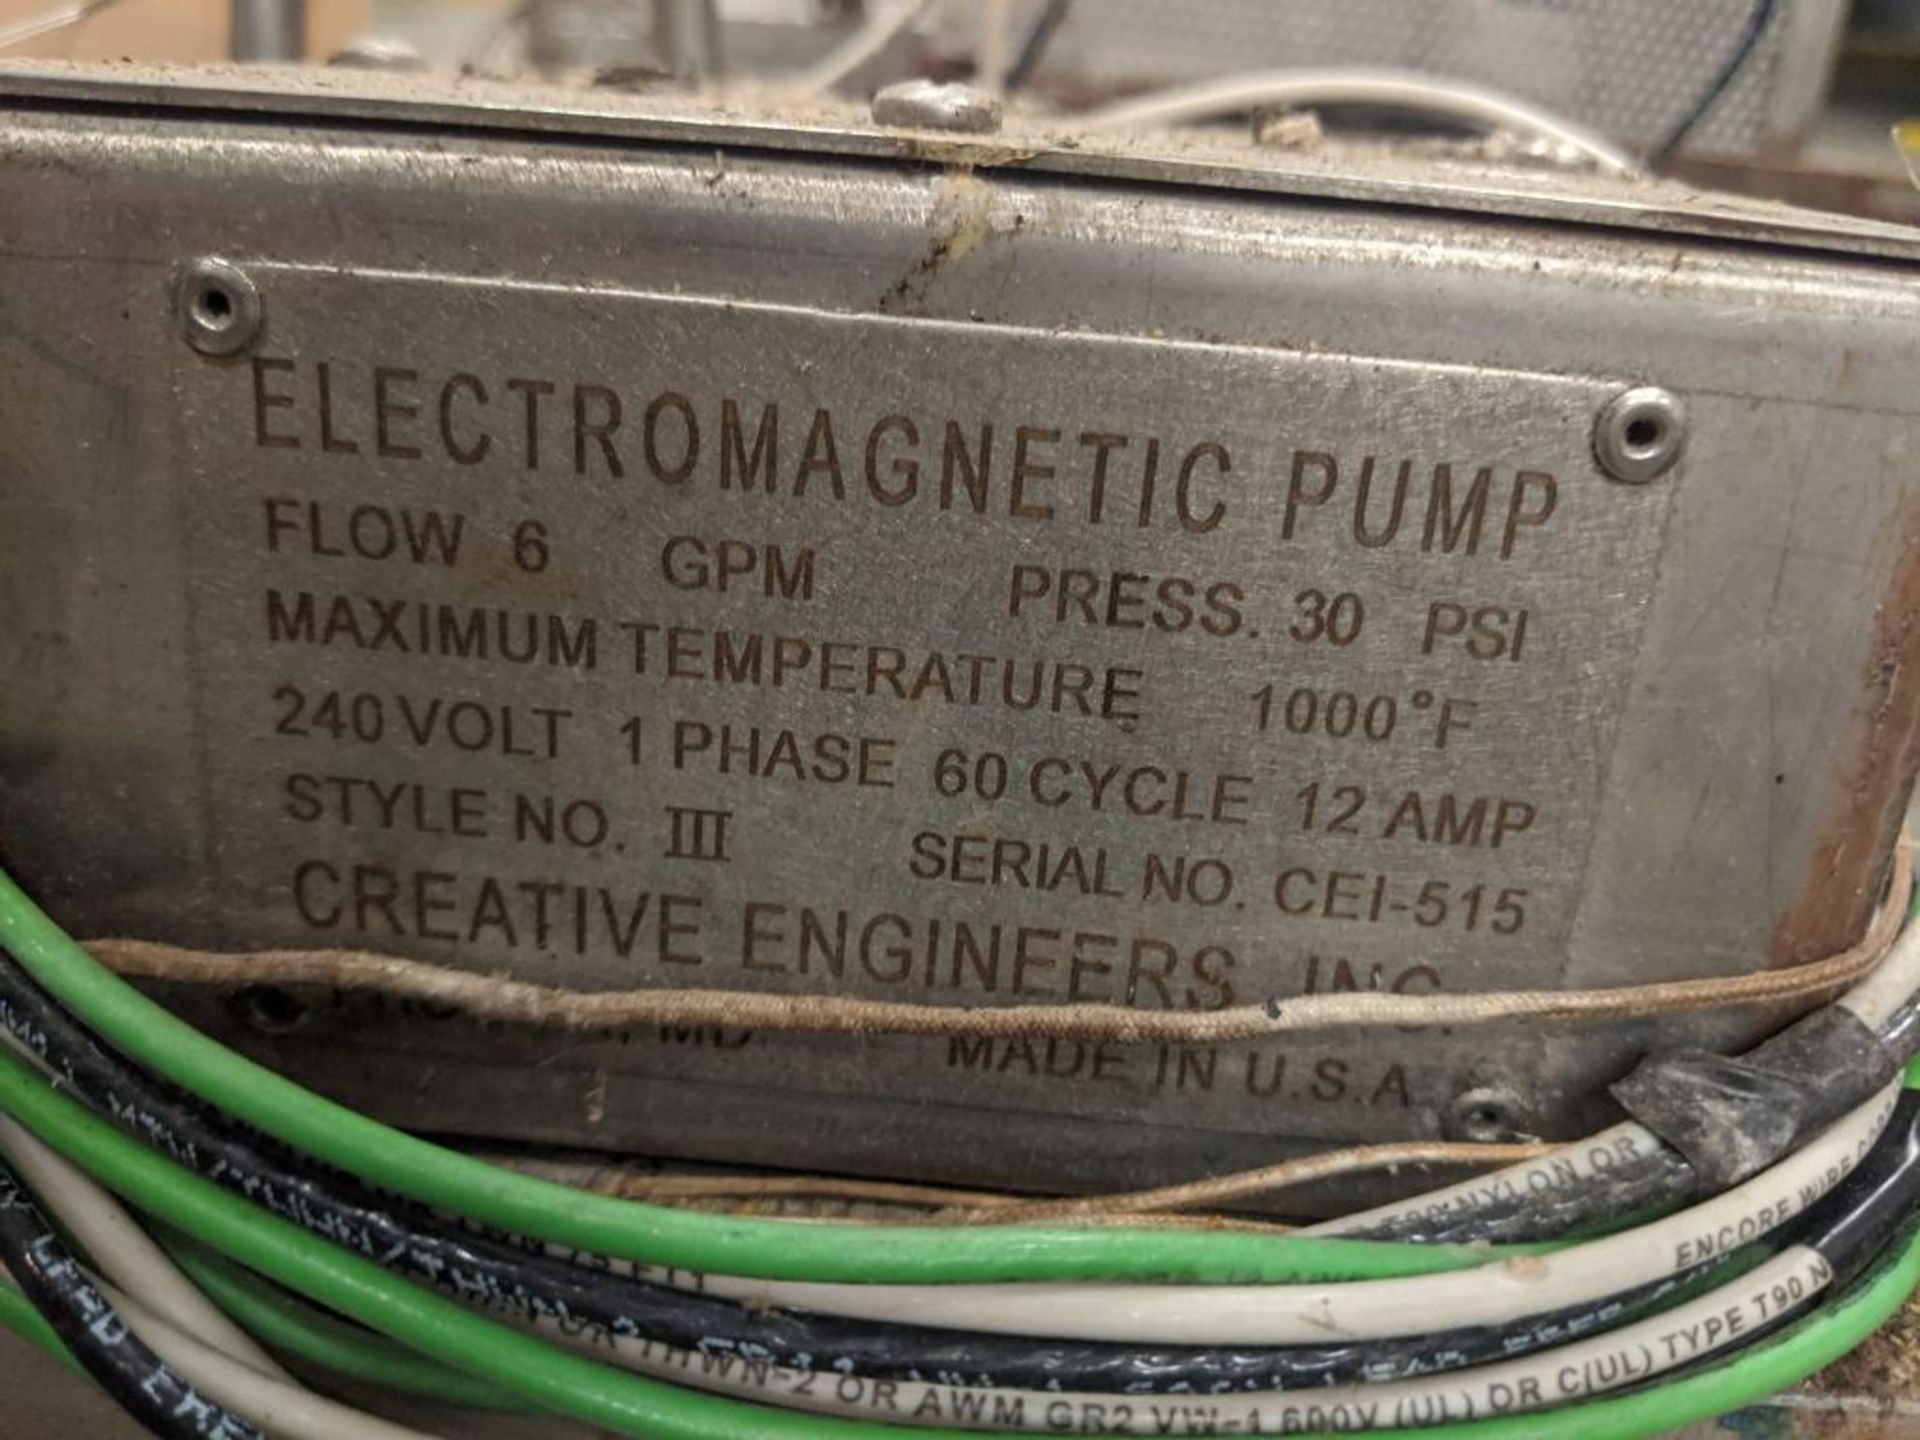 Creative Engineers Inc. Style No. III Electromagnetic Pump - Image 3 of 3